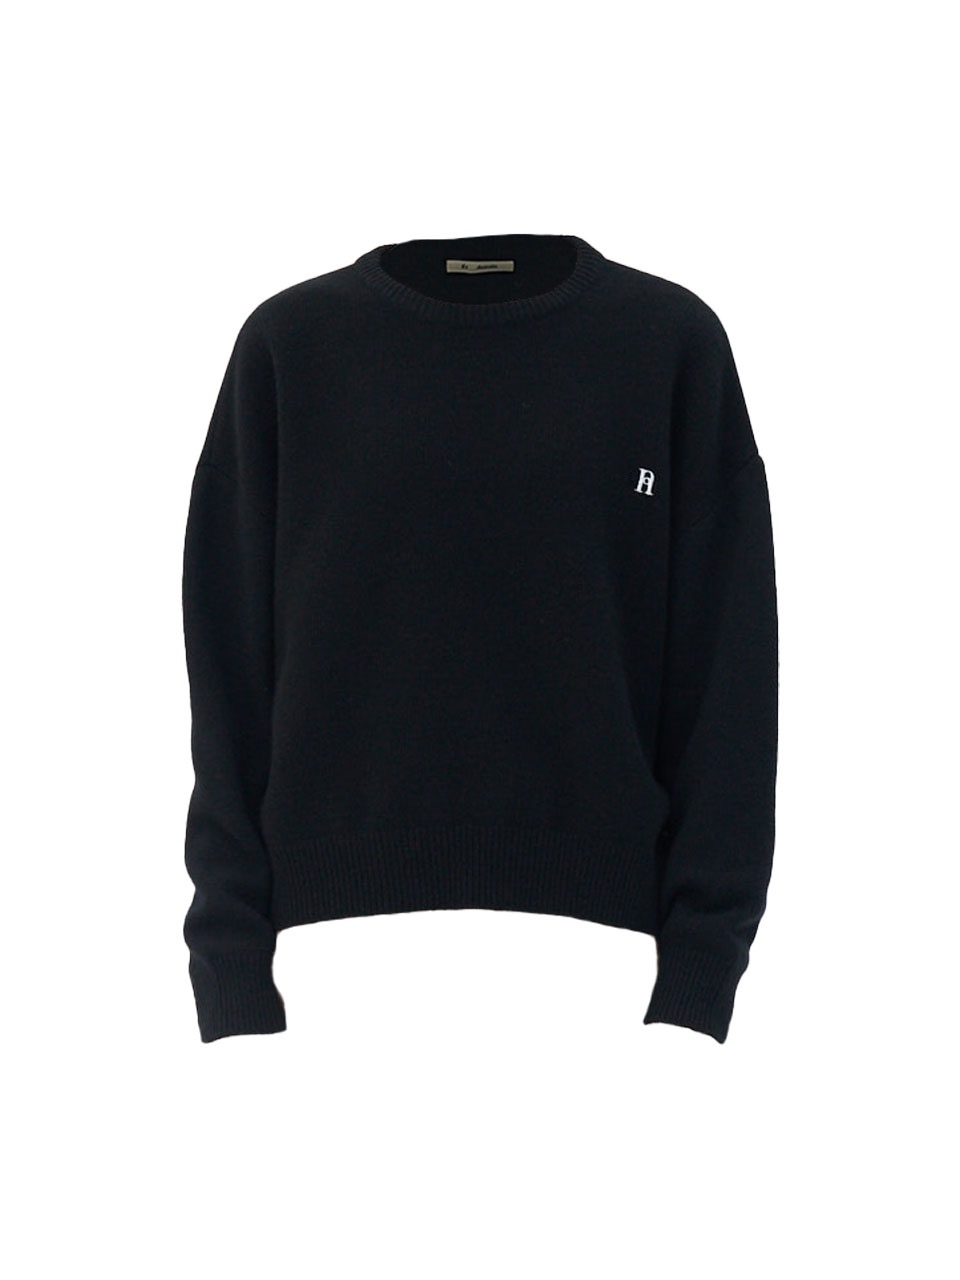 Logo cashmere-blend knit sweater (Black)